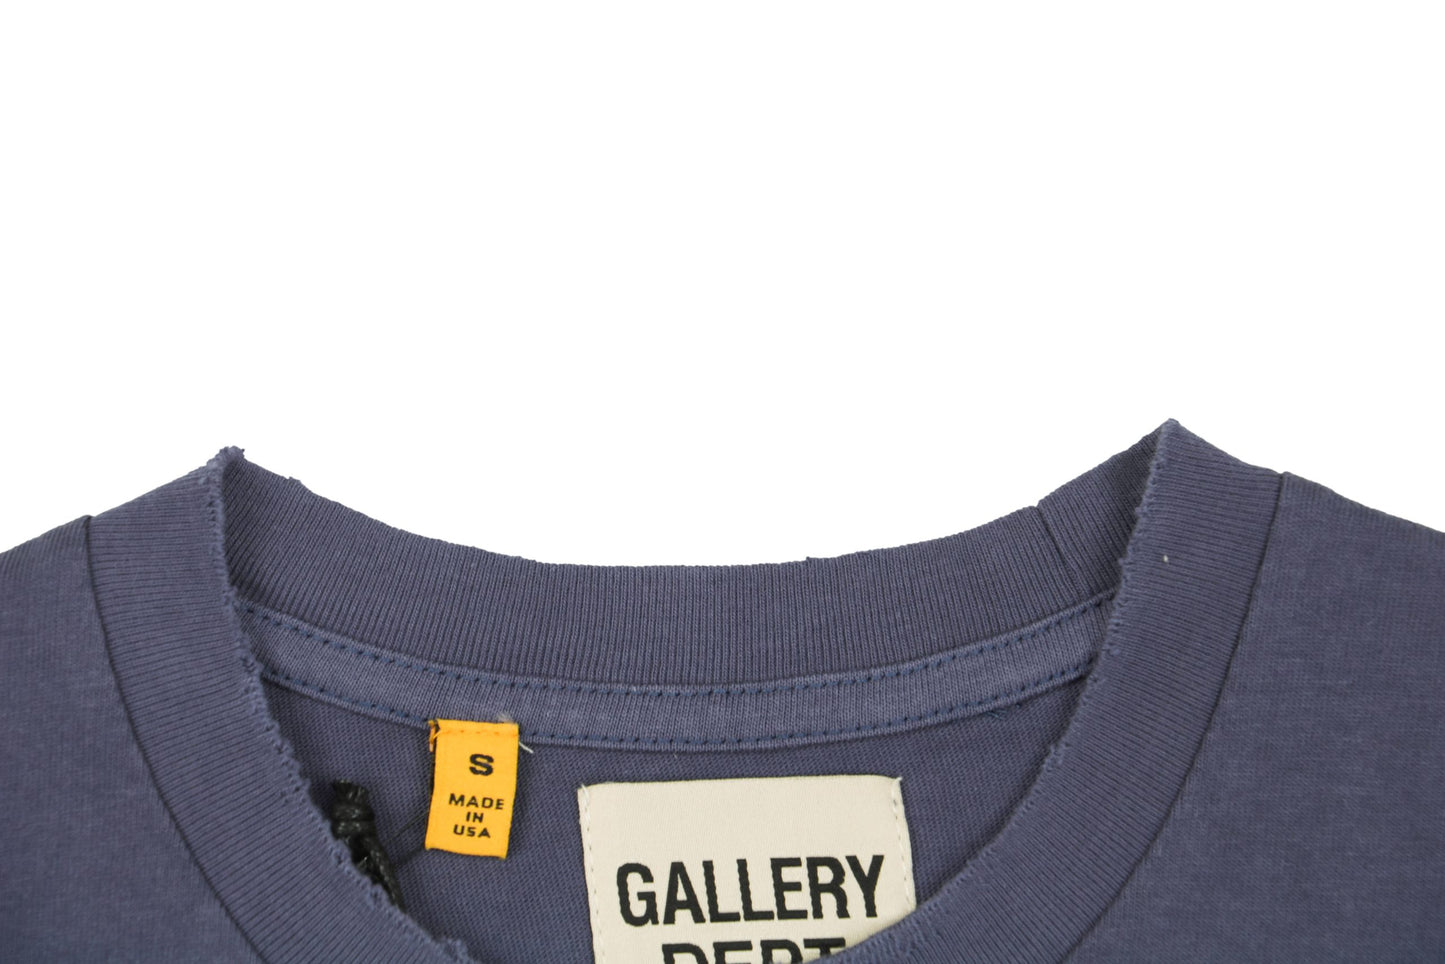 Gallery Dept Splash Paint Navy T-Shirt